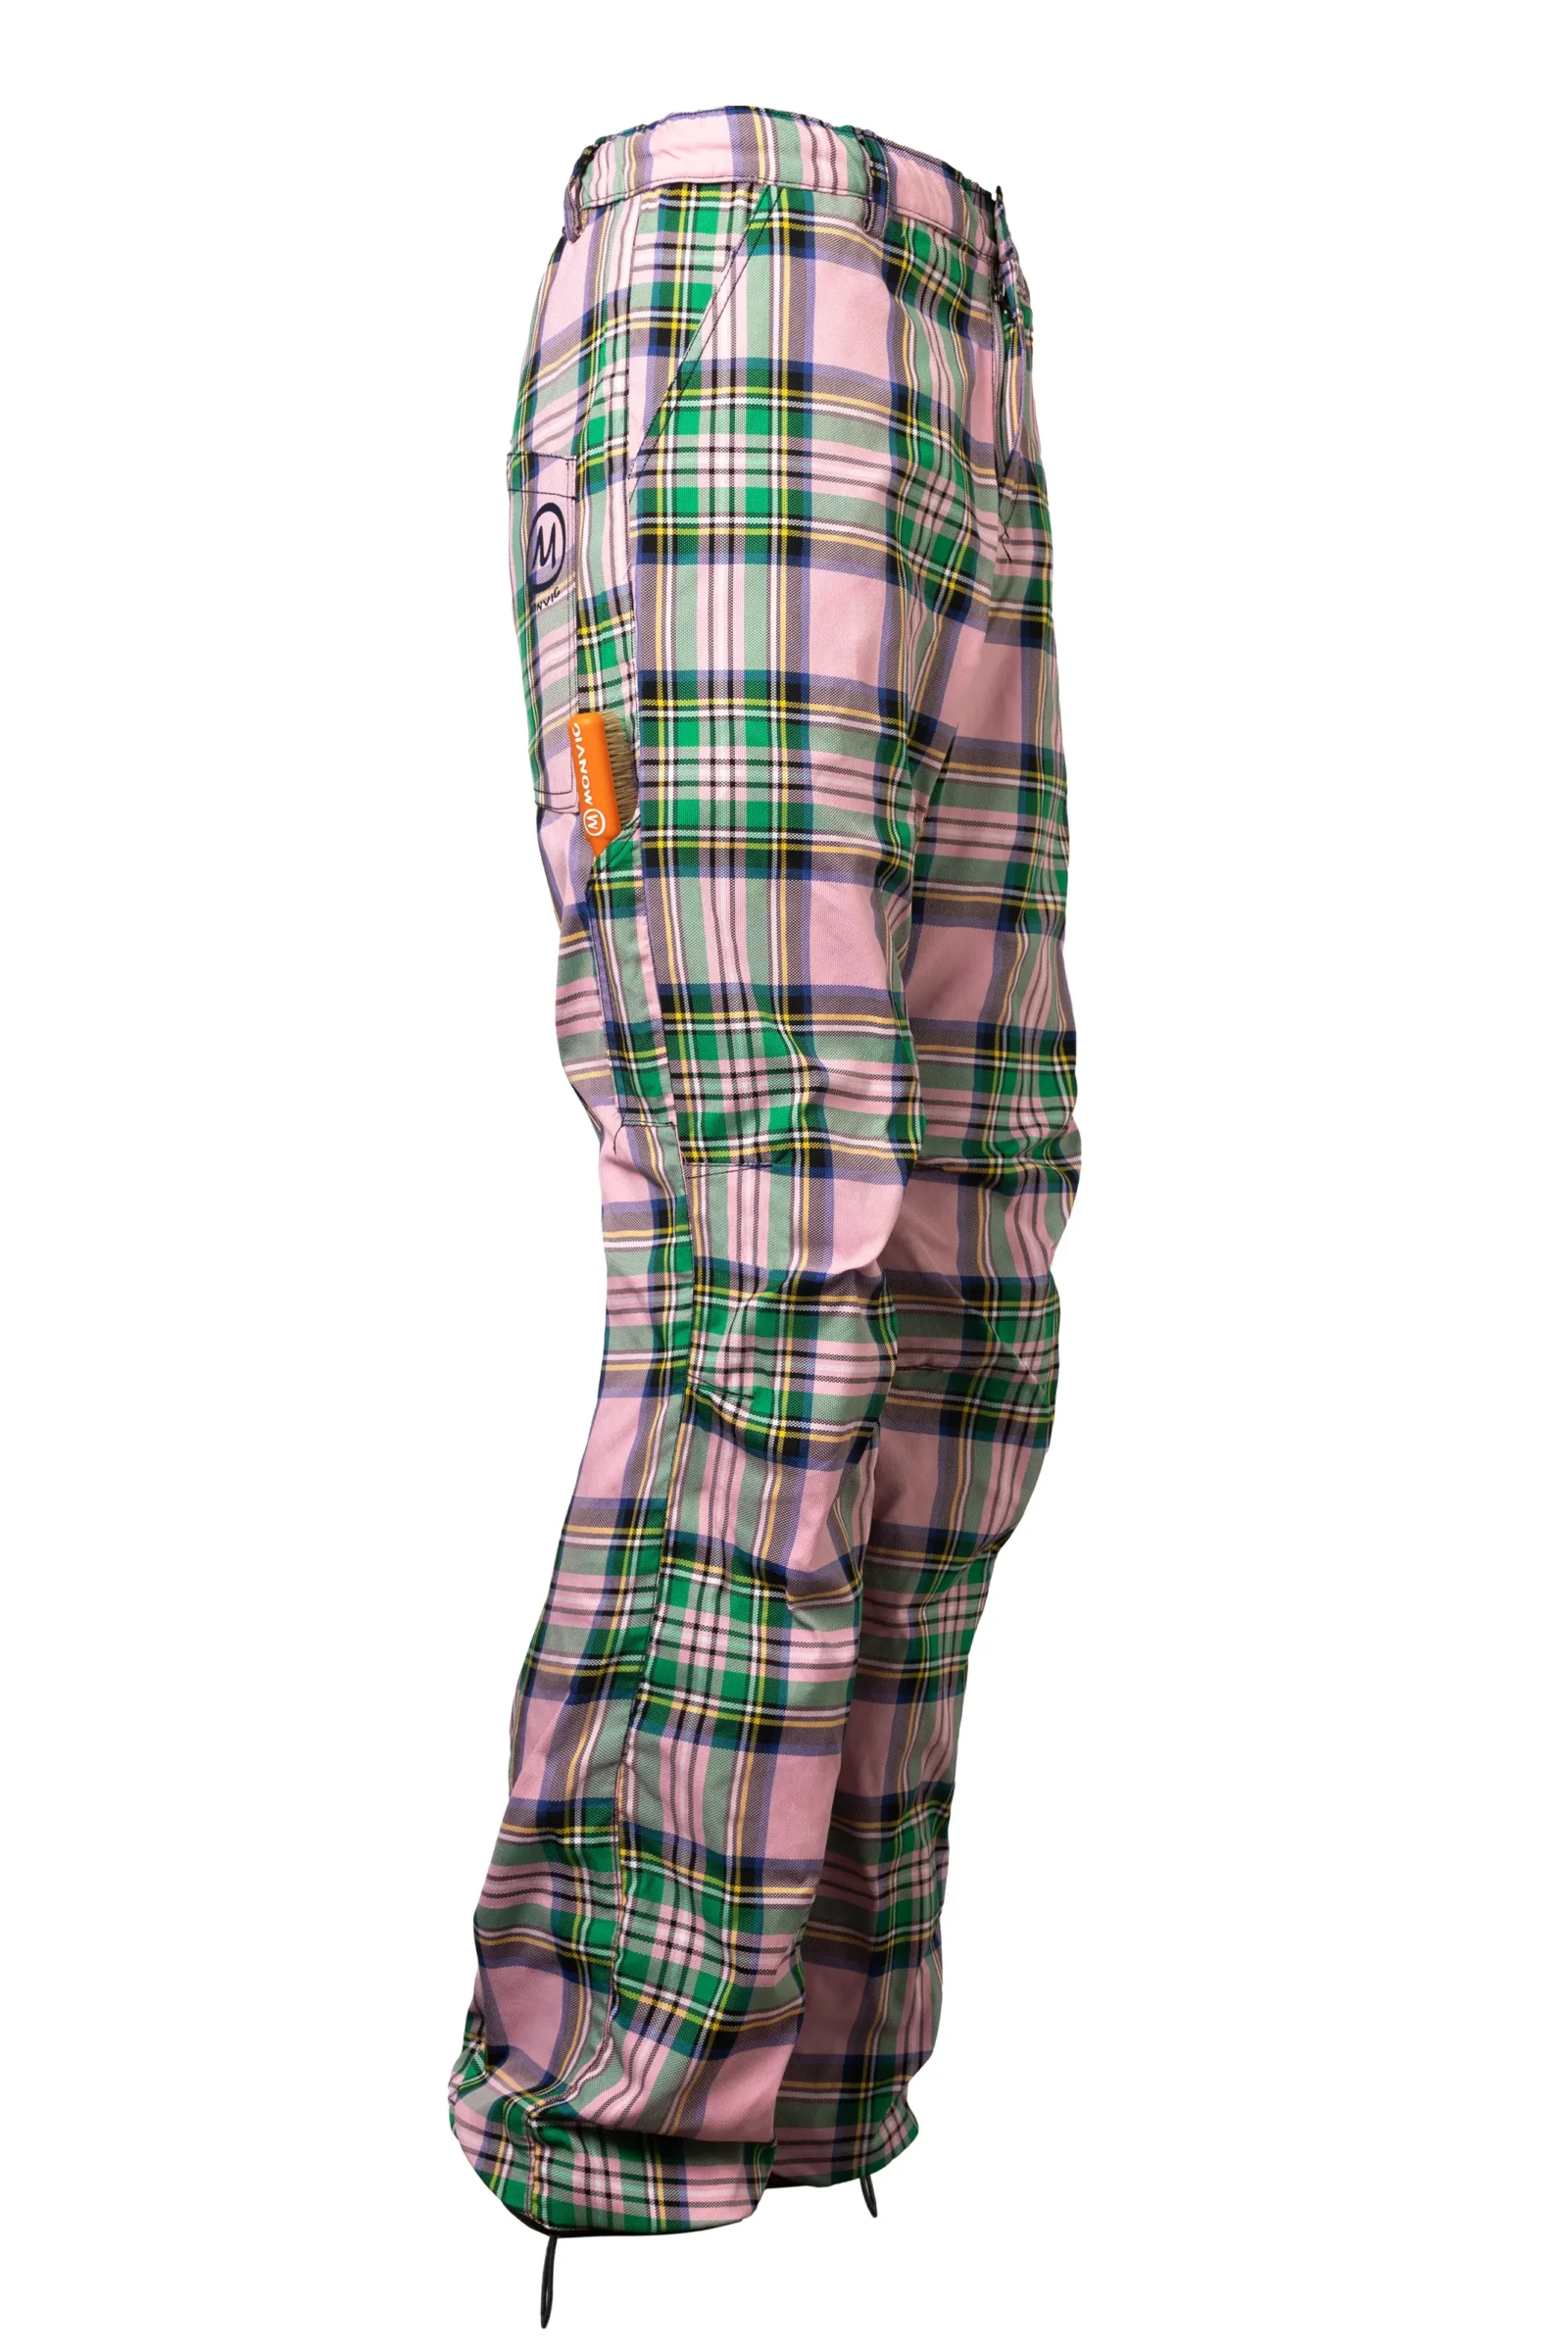 Pantalone uomo impermeabile Principe di Galles rosa/verde - BILLY 2 - MONVIC